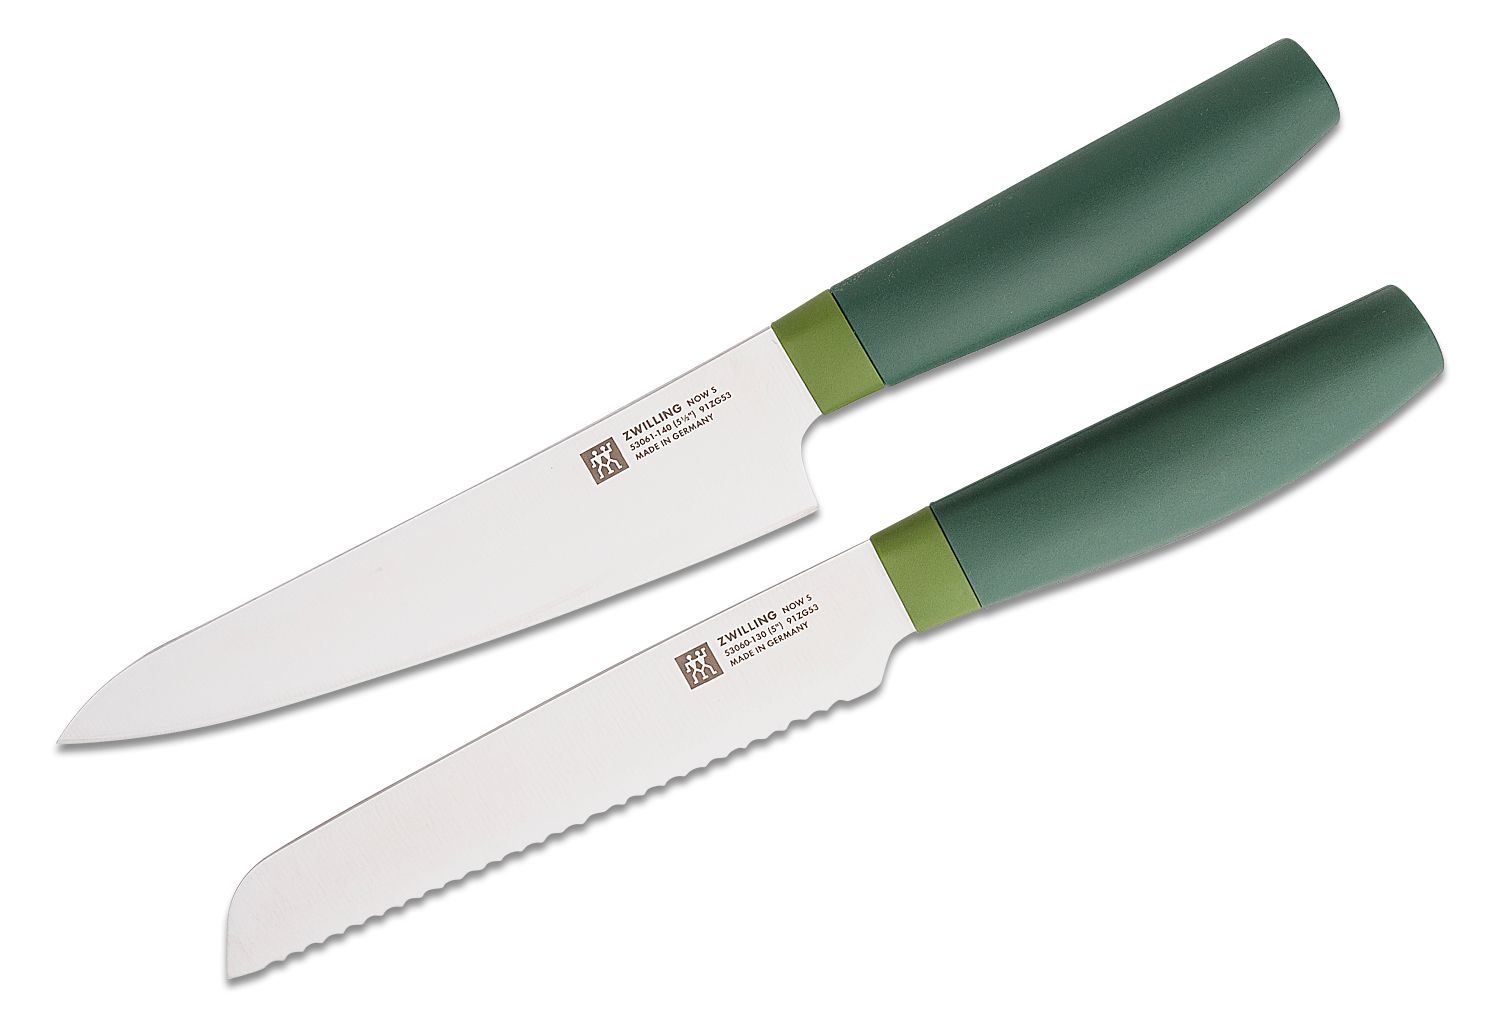 Buy ZWILLING Now S Knife block set